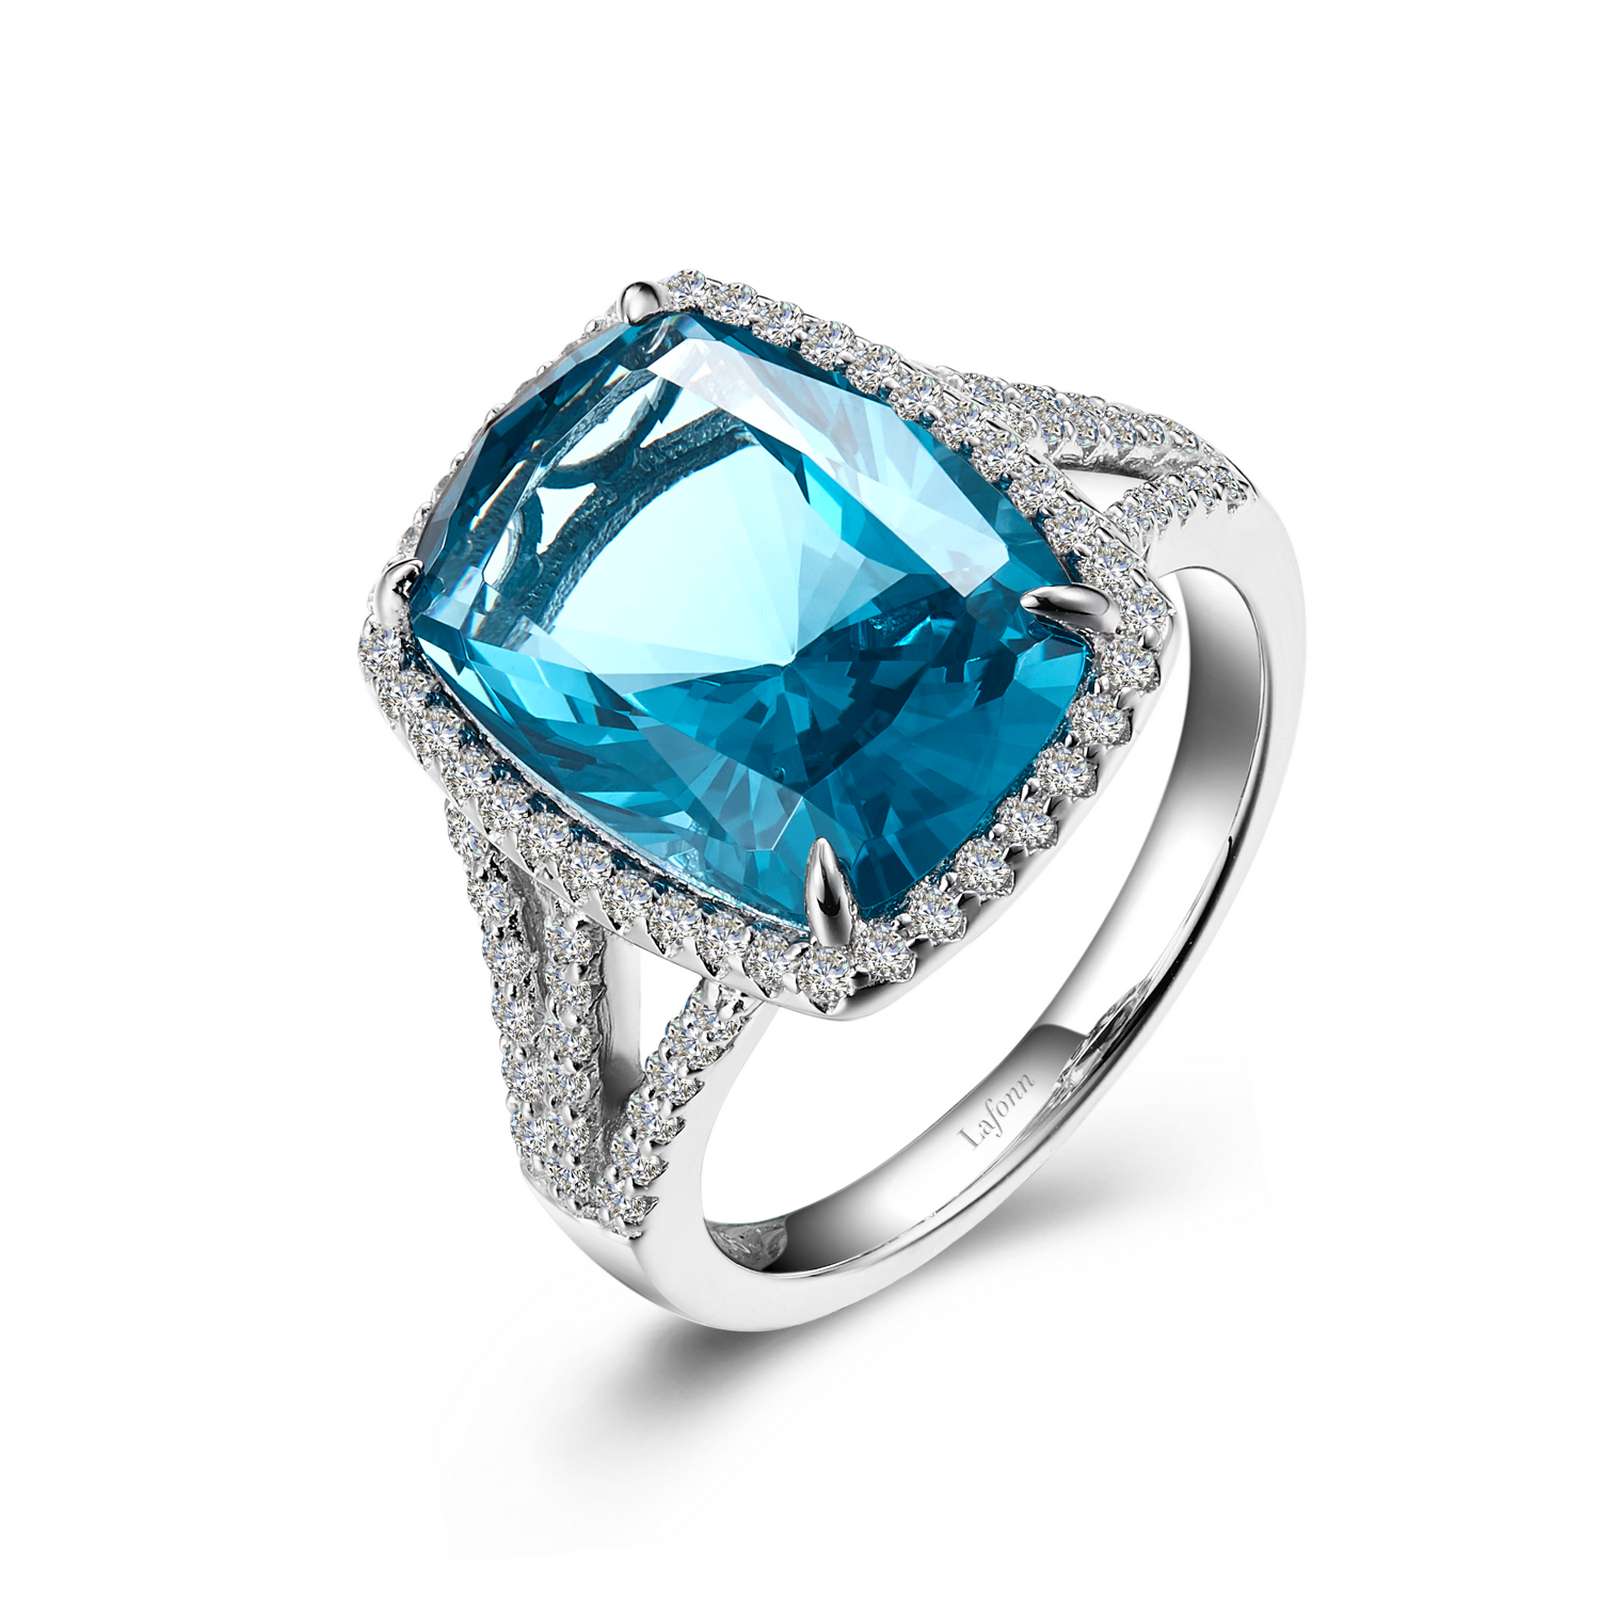 Cushion-Cut Halo Engagement Ring Diamond Shop Ada, OK